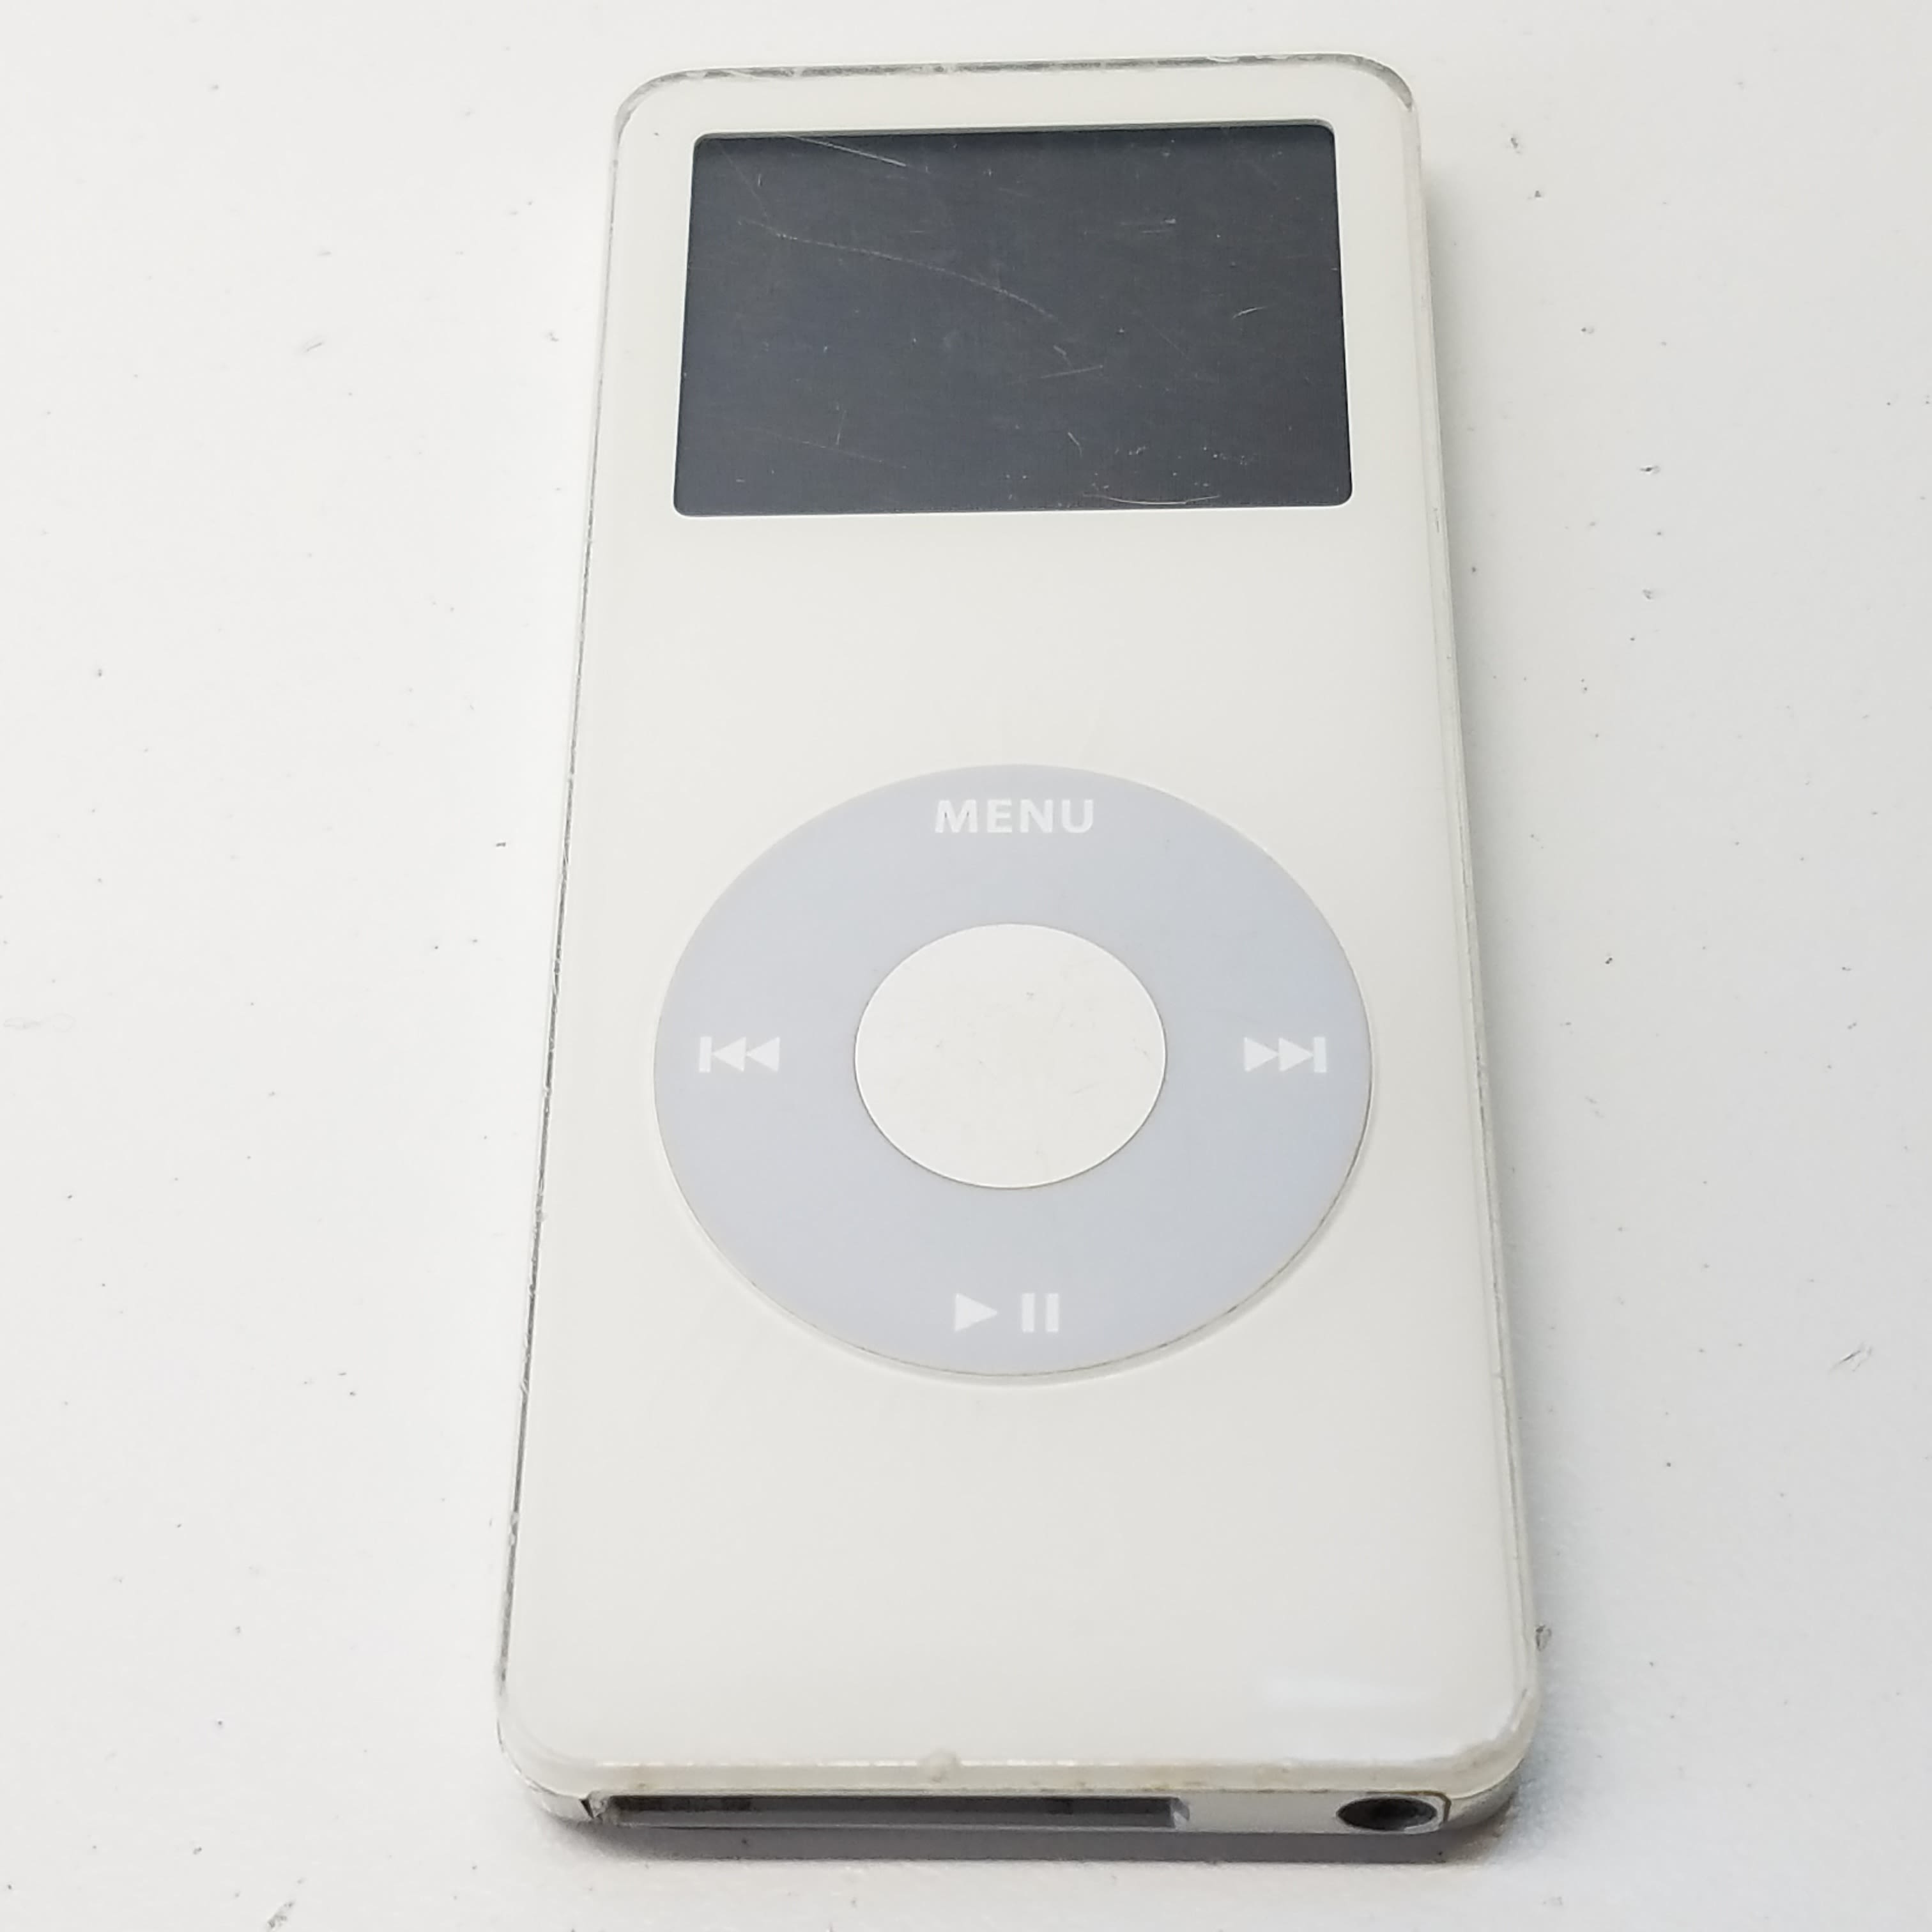 Buy the Apple iPod Nano (1st Generation) - White (A1137) 2GB